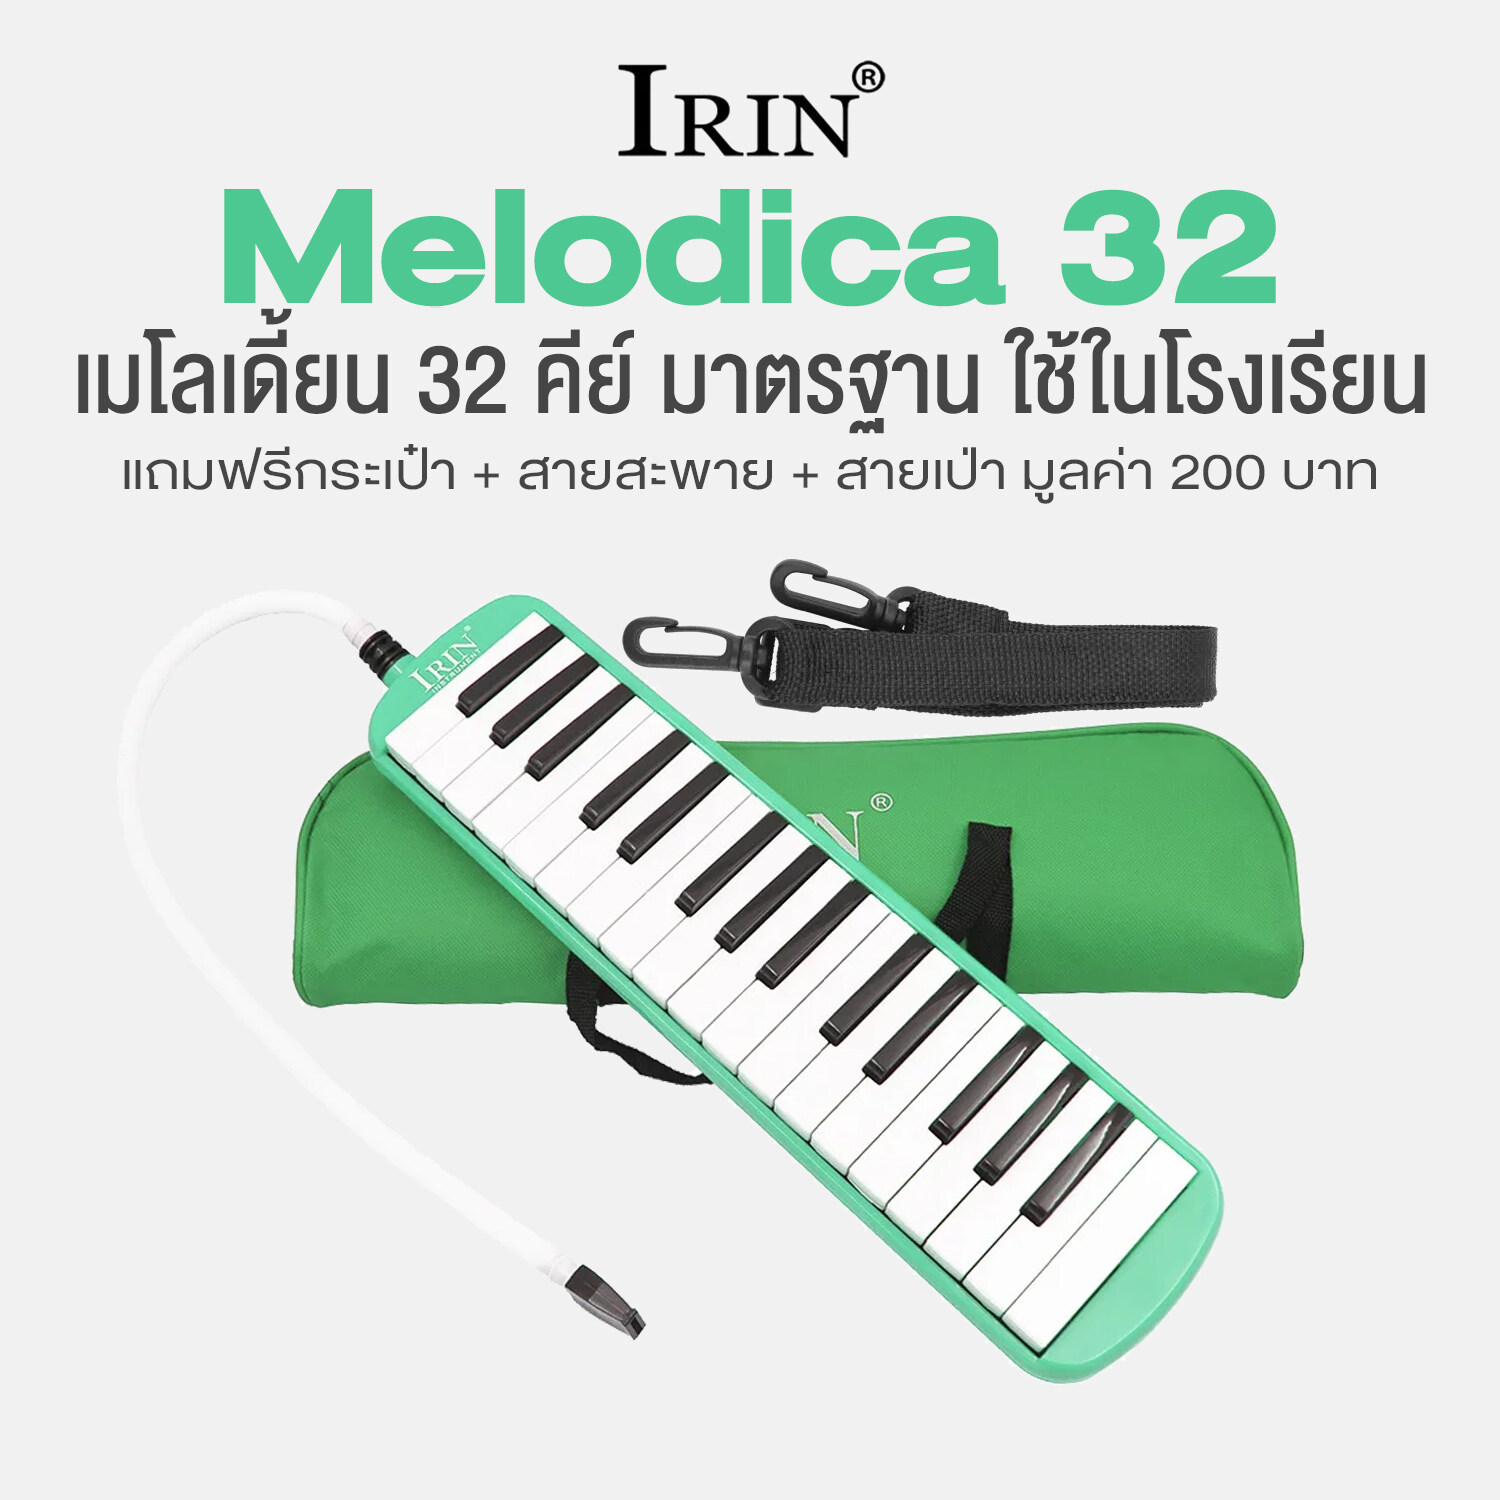 IRIN Melodica 32 Green